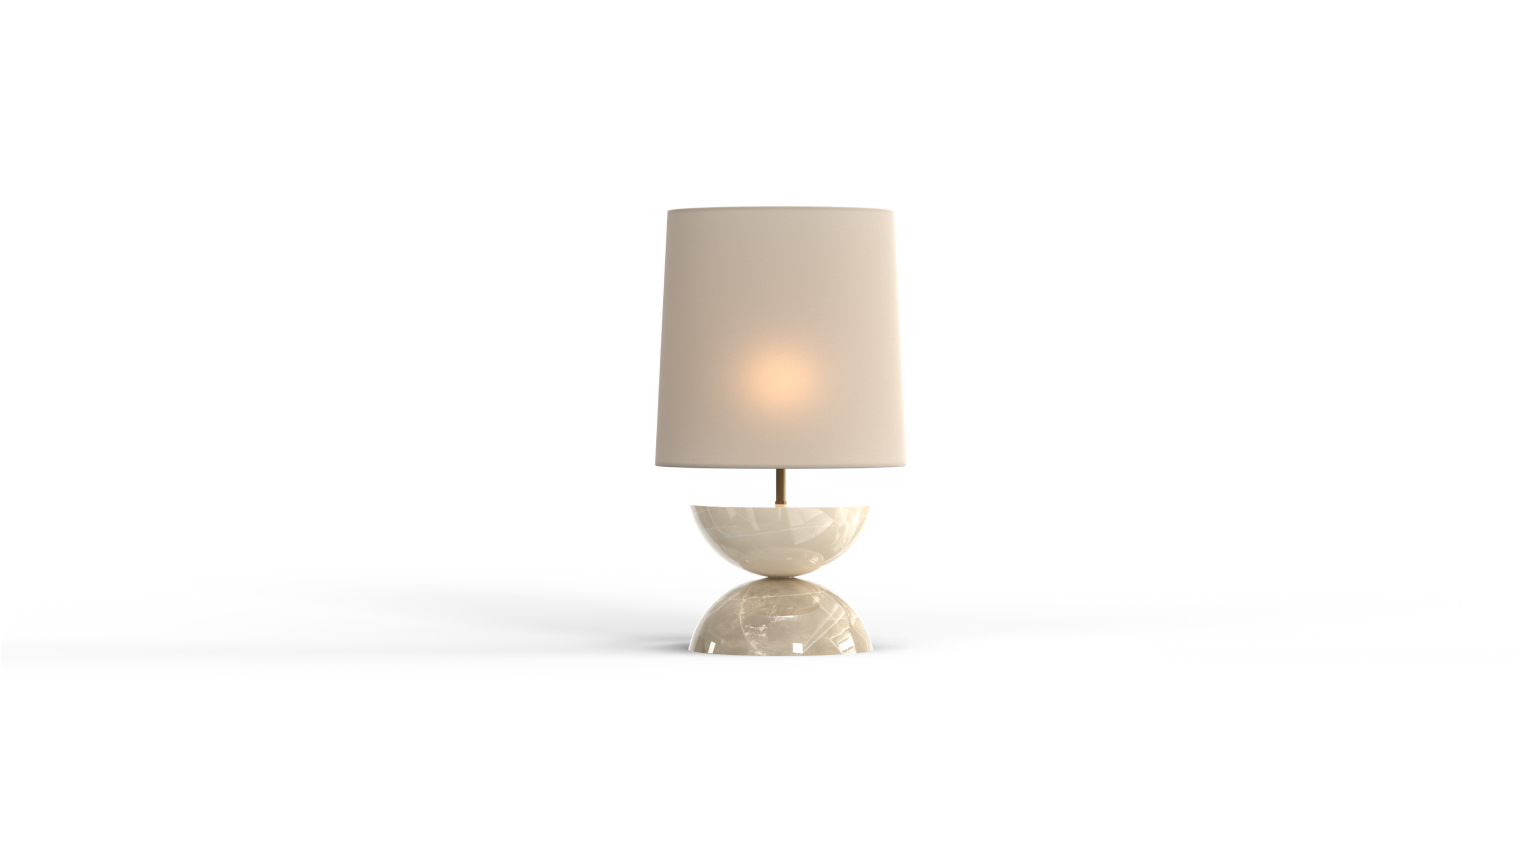 3D silo of a lamp made in imagine.io